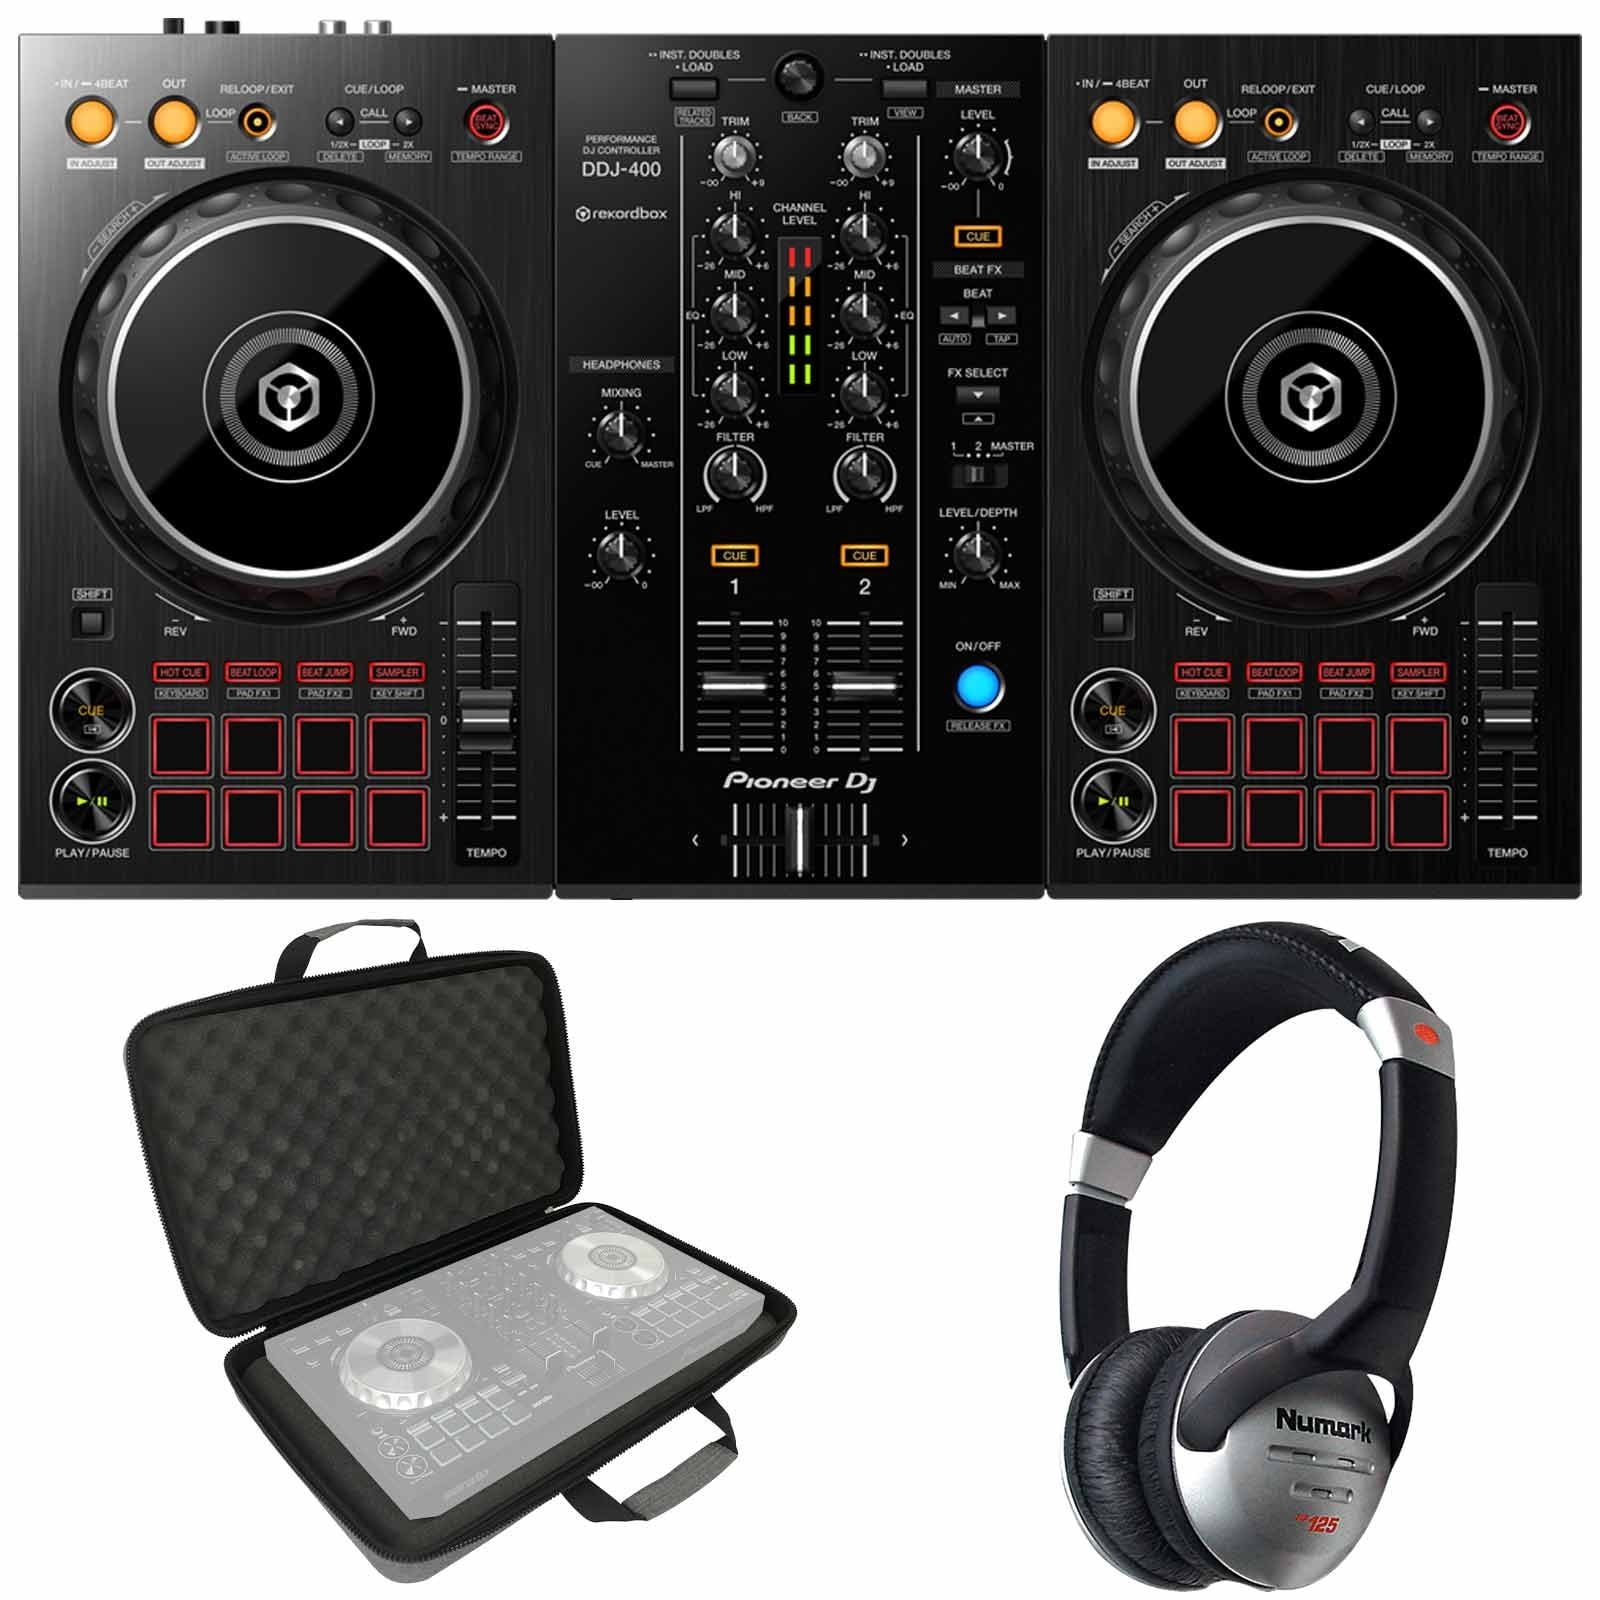 Pioneer DJ DDJ-400 2-channel rekordbox DJ Controller with Numark